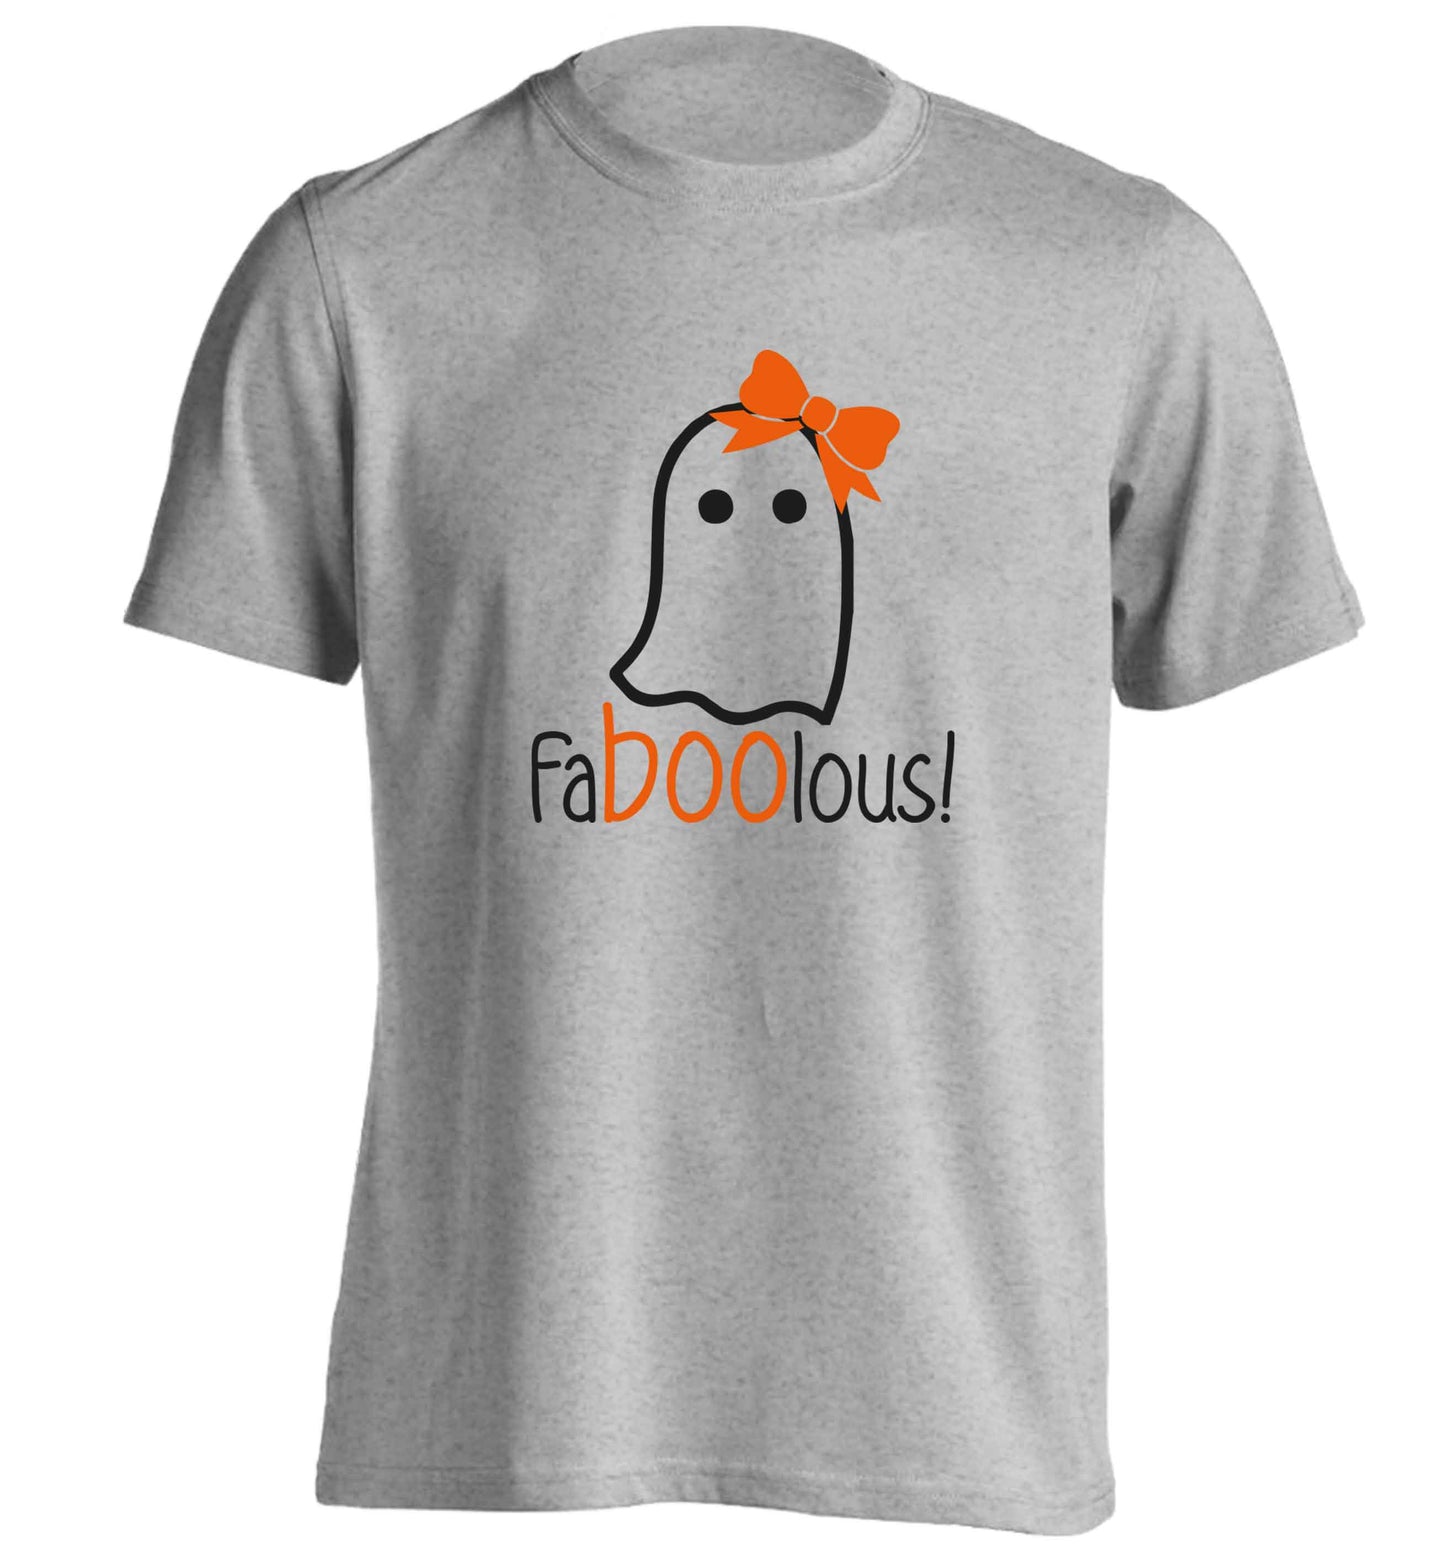 Faboolous ghost adults unisex grey Tshirt 2XL